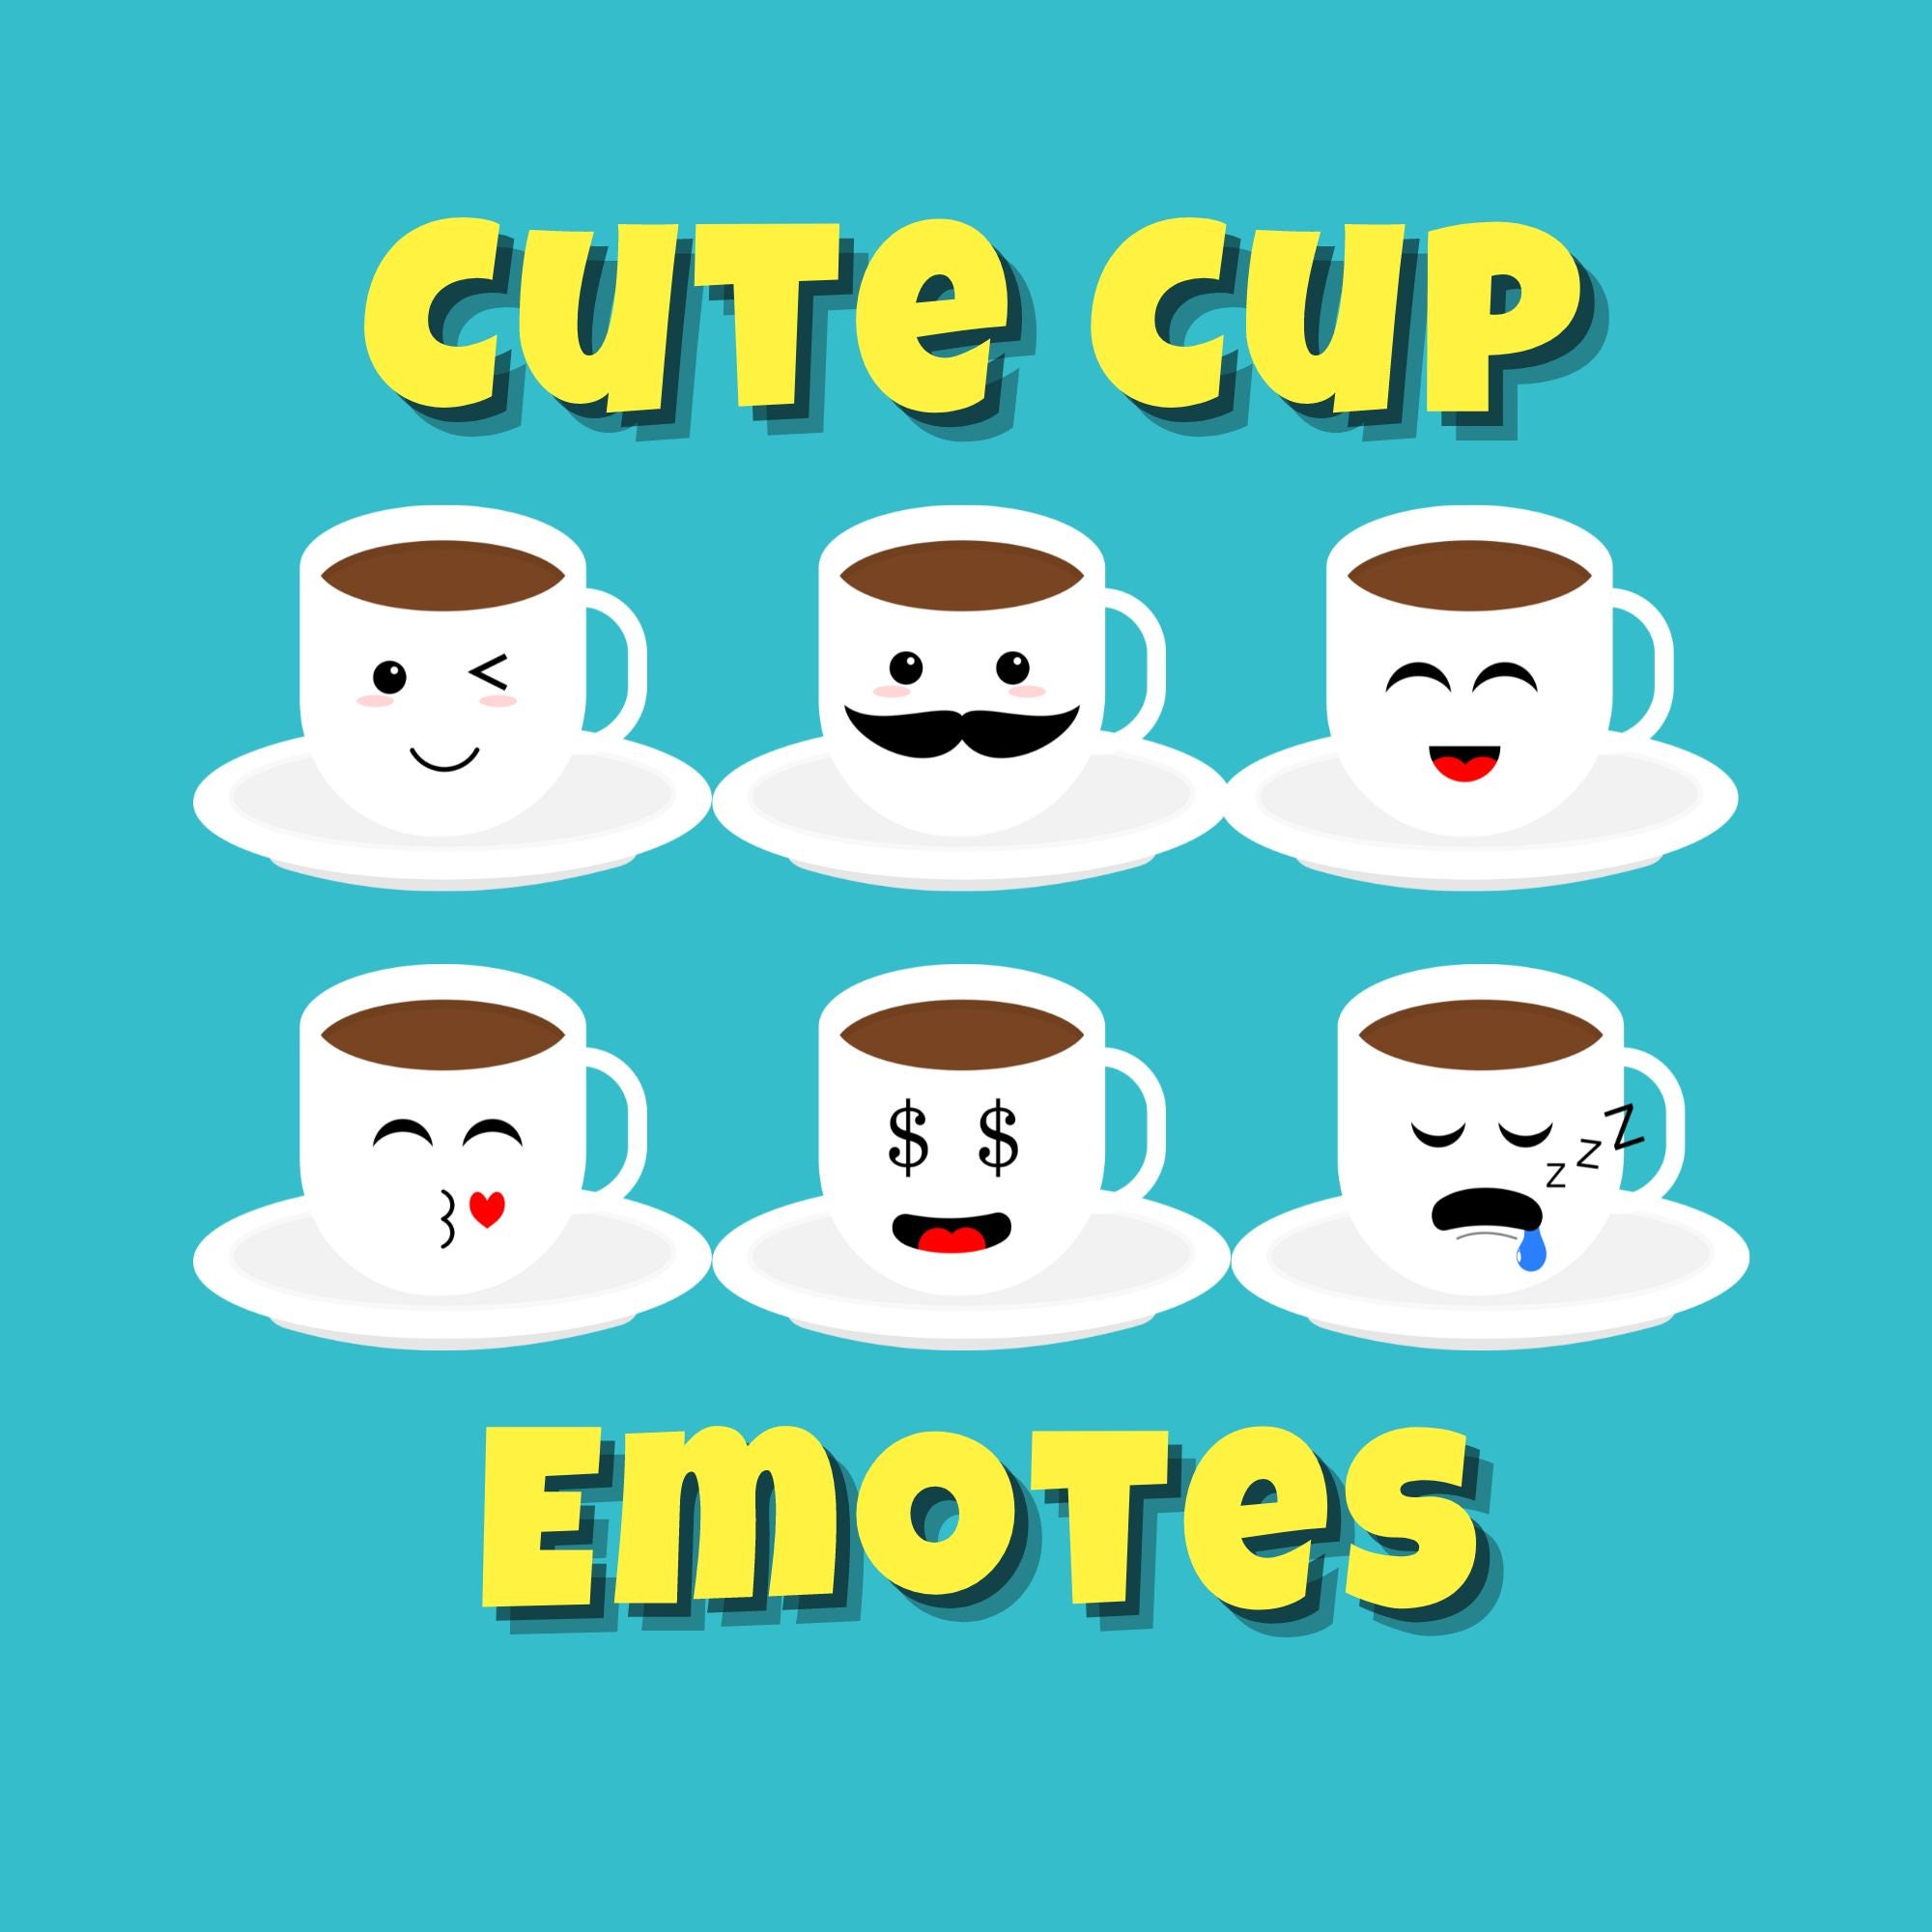 yamete - Discord Emoji